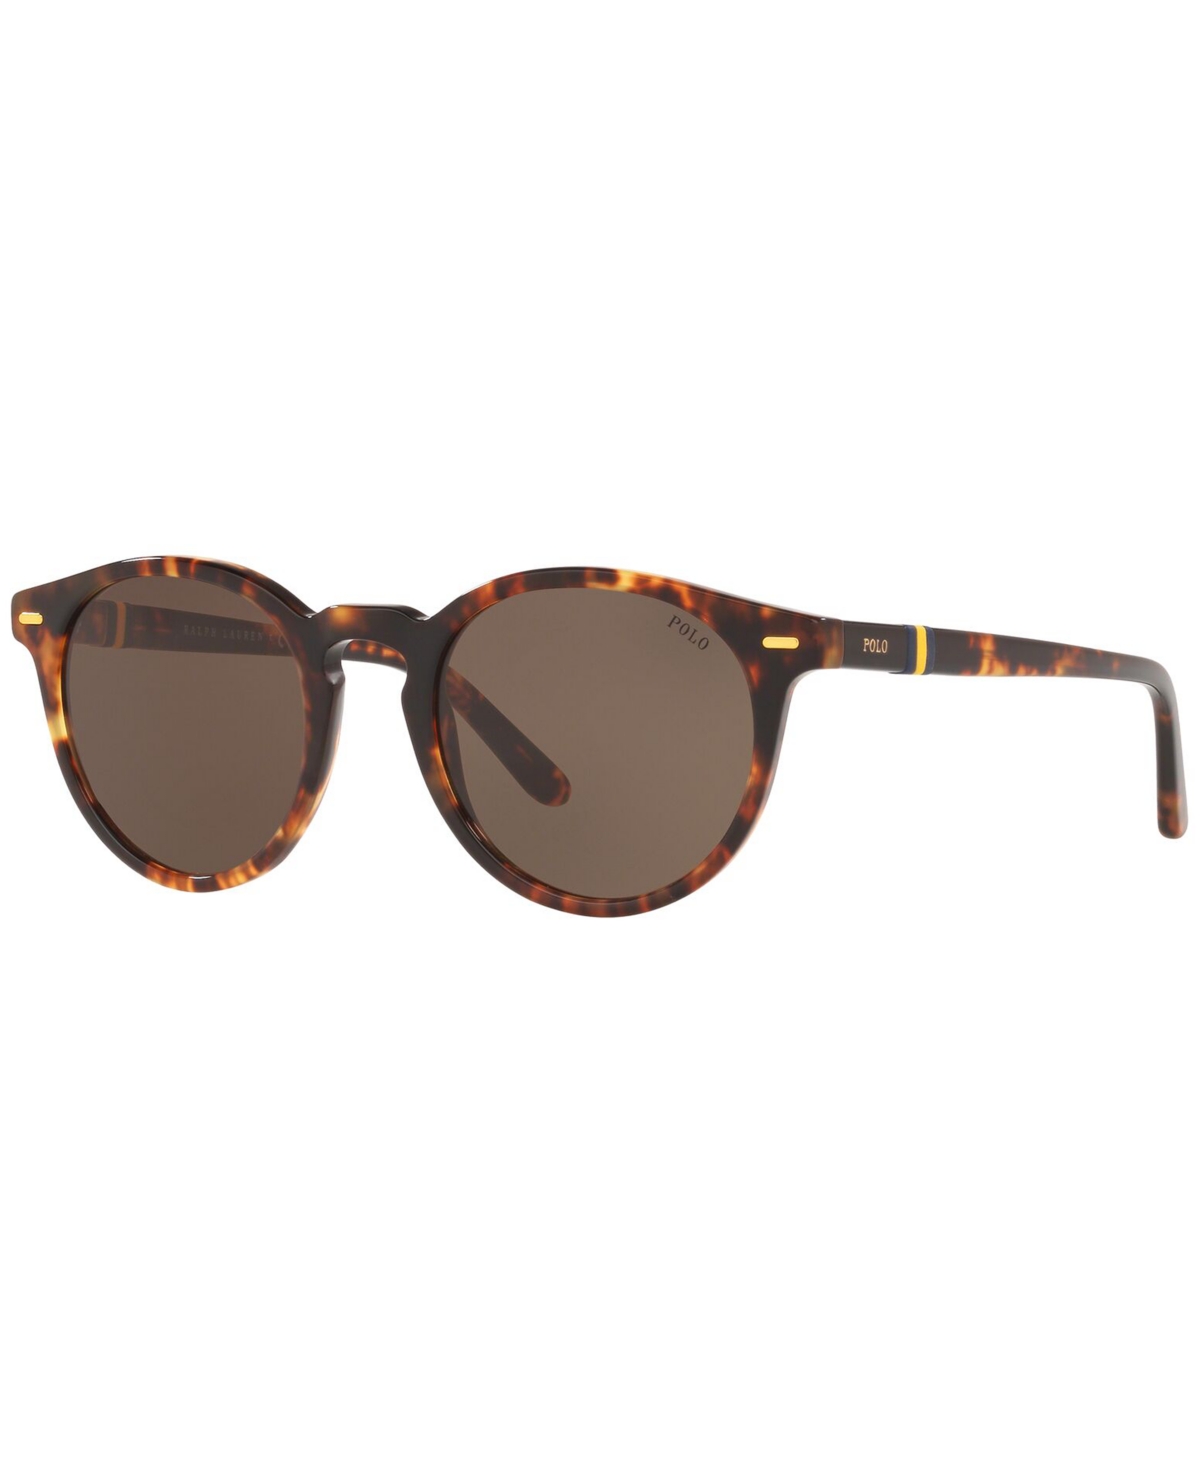 Polo Ralph Lauren Sunglasses, Ph4151 50 In New Jerry Tortoise,brown